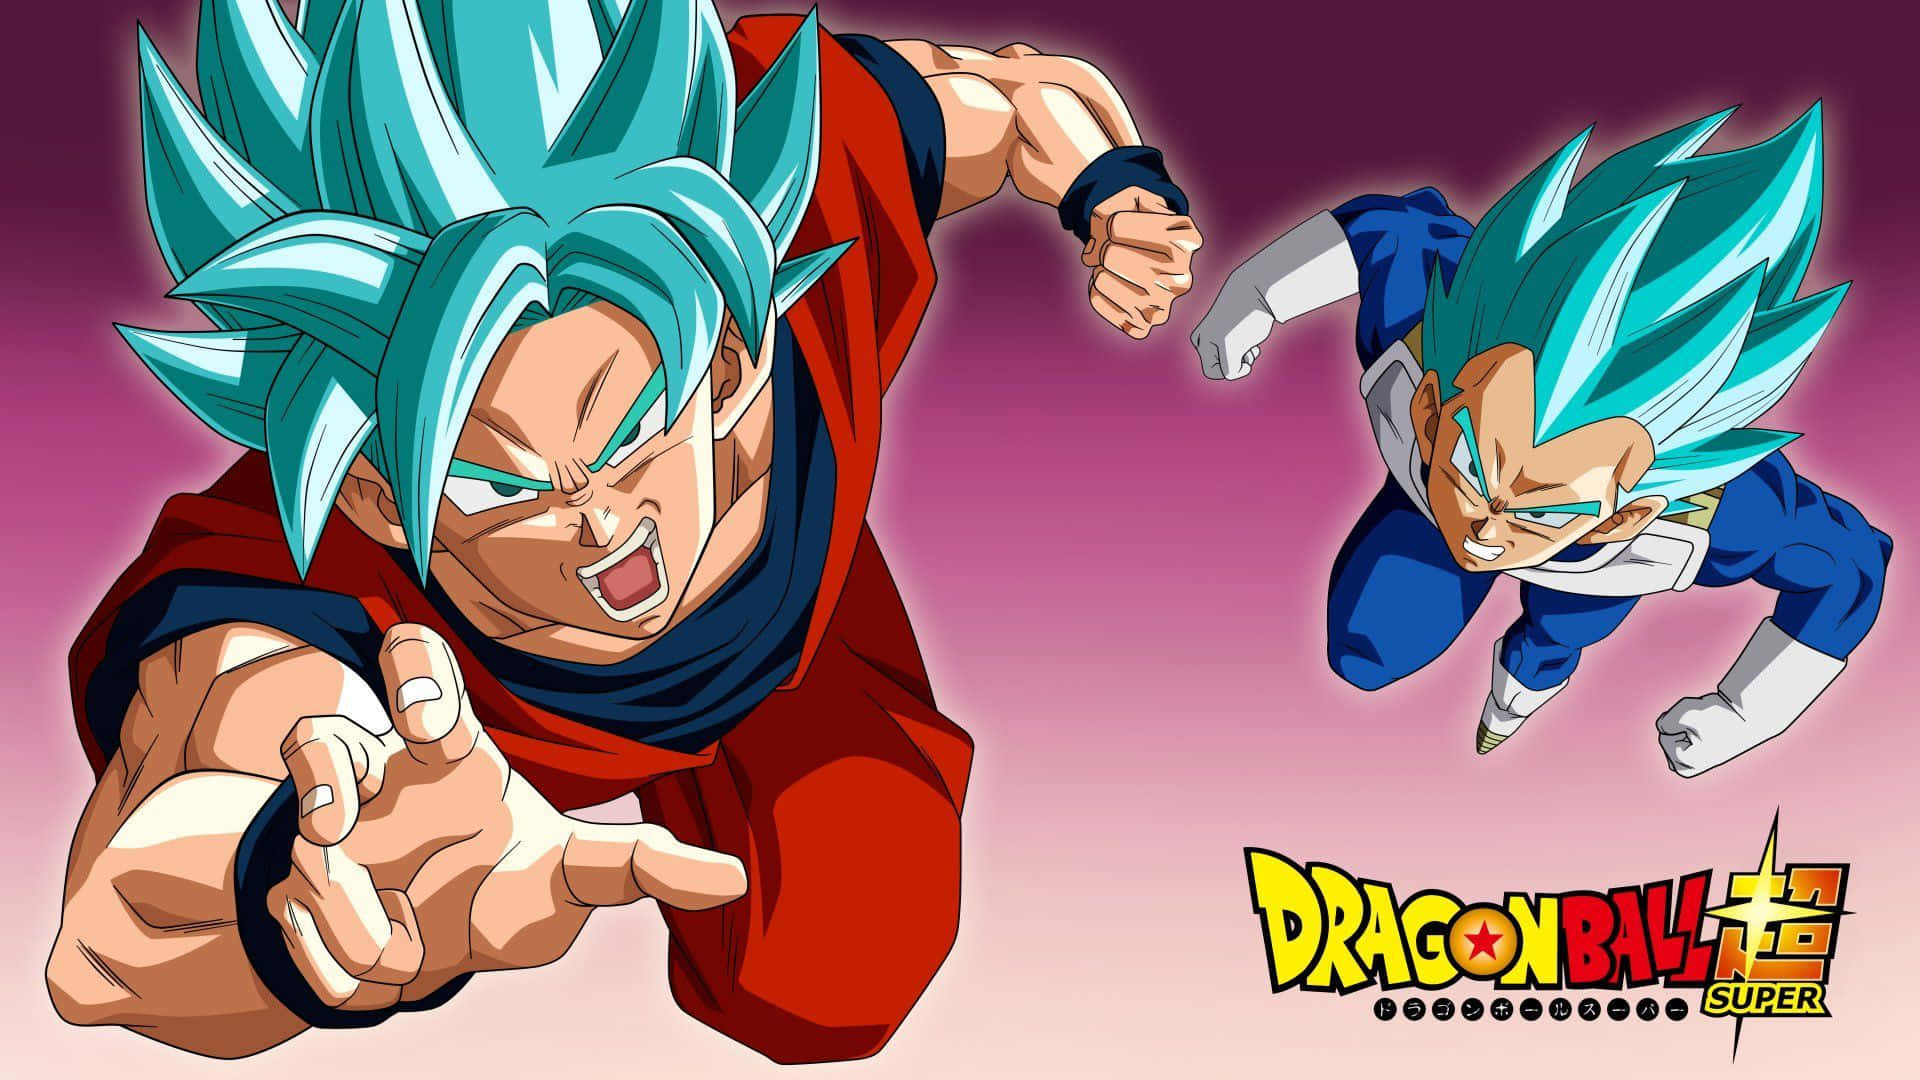 Goku and Vegeta, two powerful Super Saiyan from the Dragon Ball Z. Wallpaper